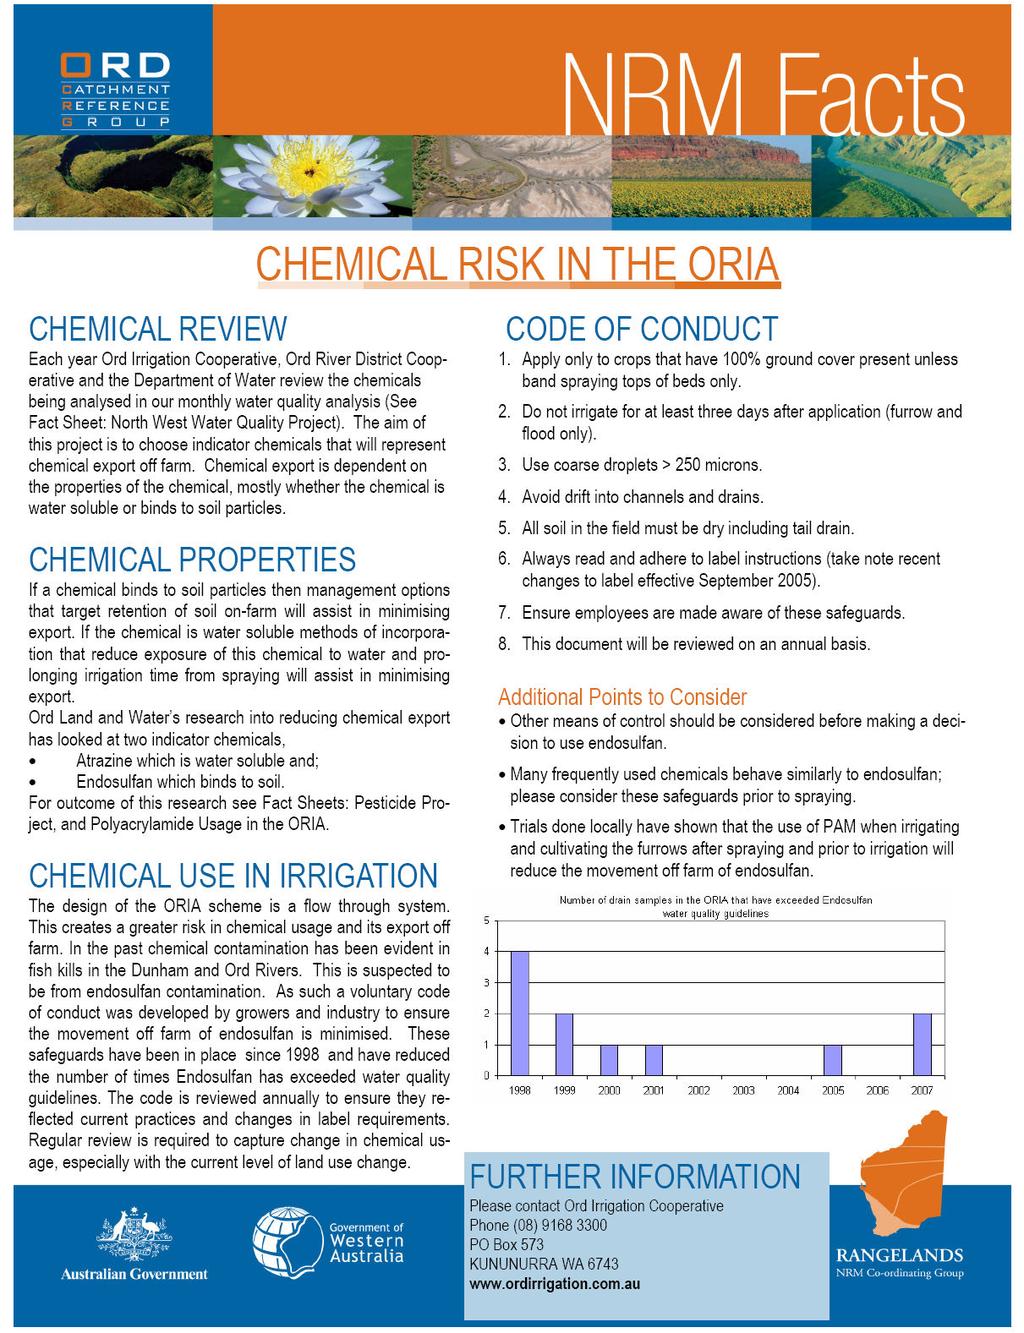 APPENDIX 11: CHEMICAL RISK